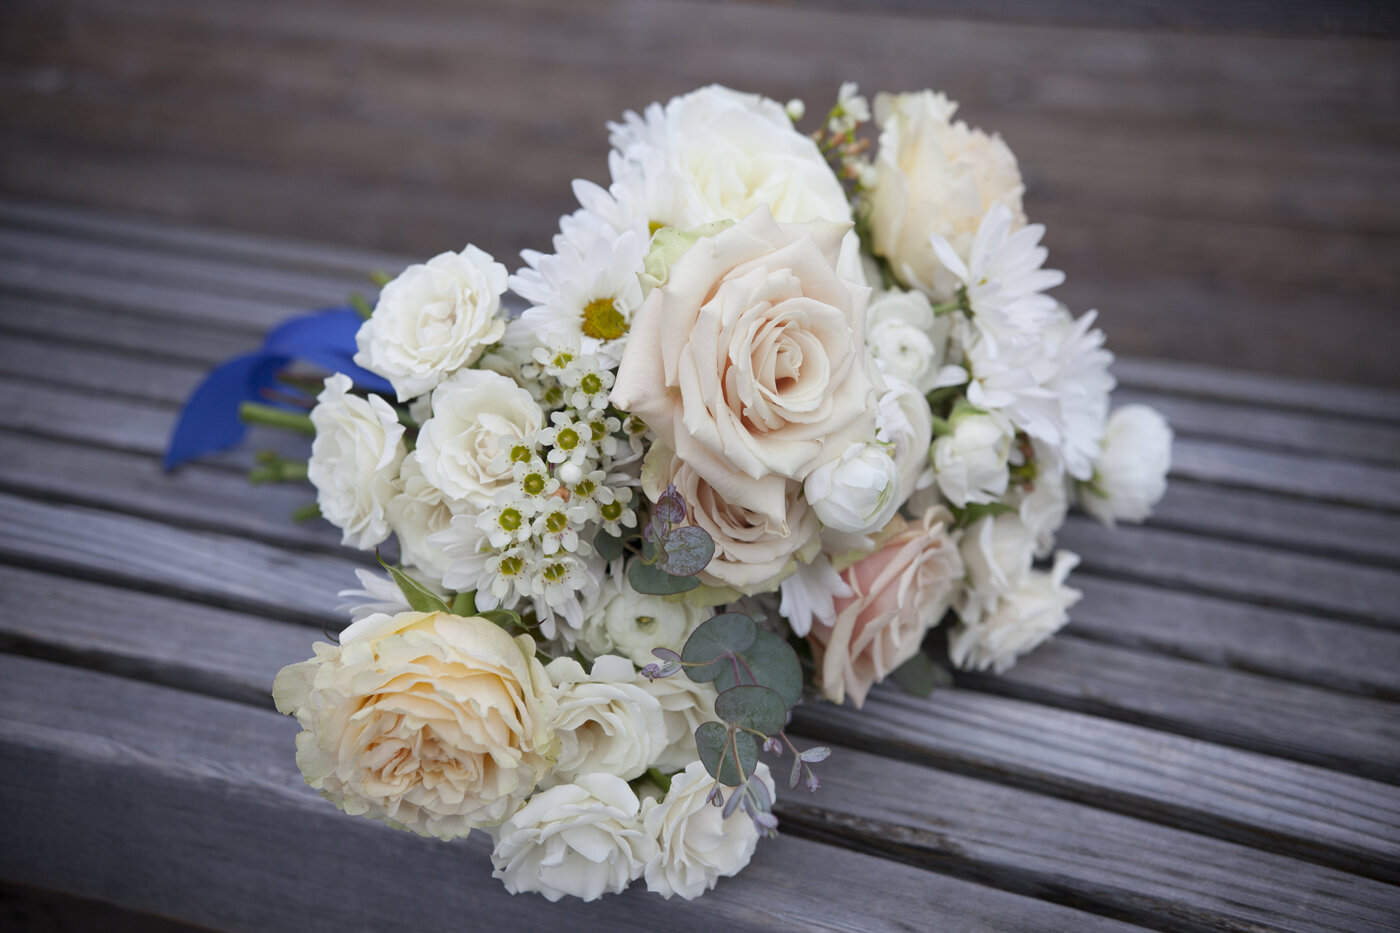 Bridal Bouquet with daisies Floral Designer Bond in Bloom.jpg